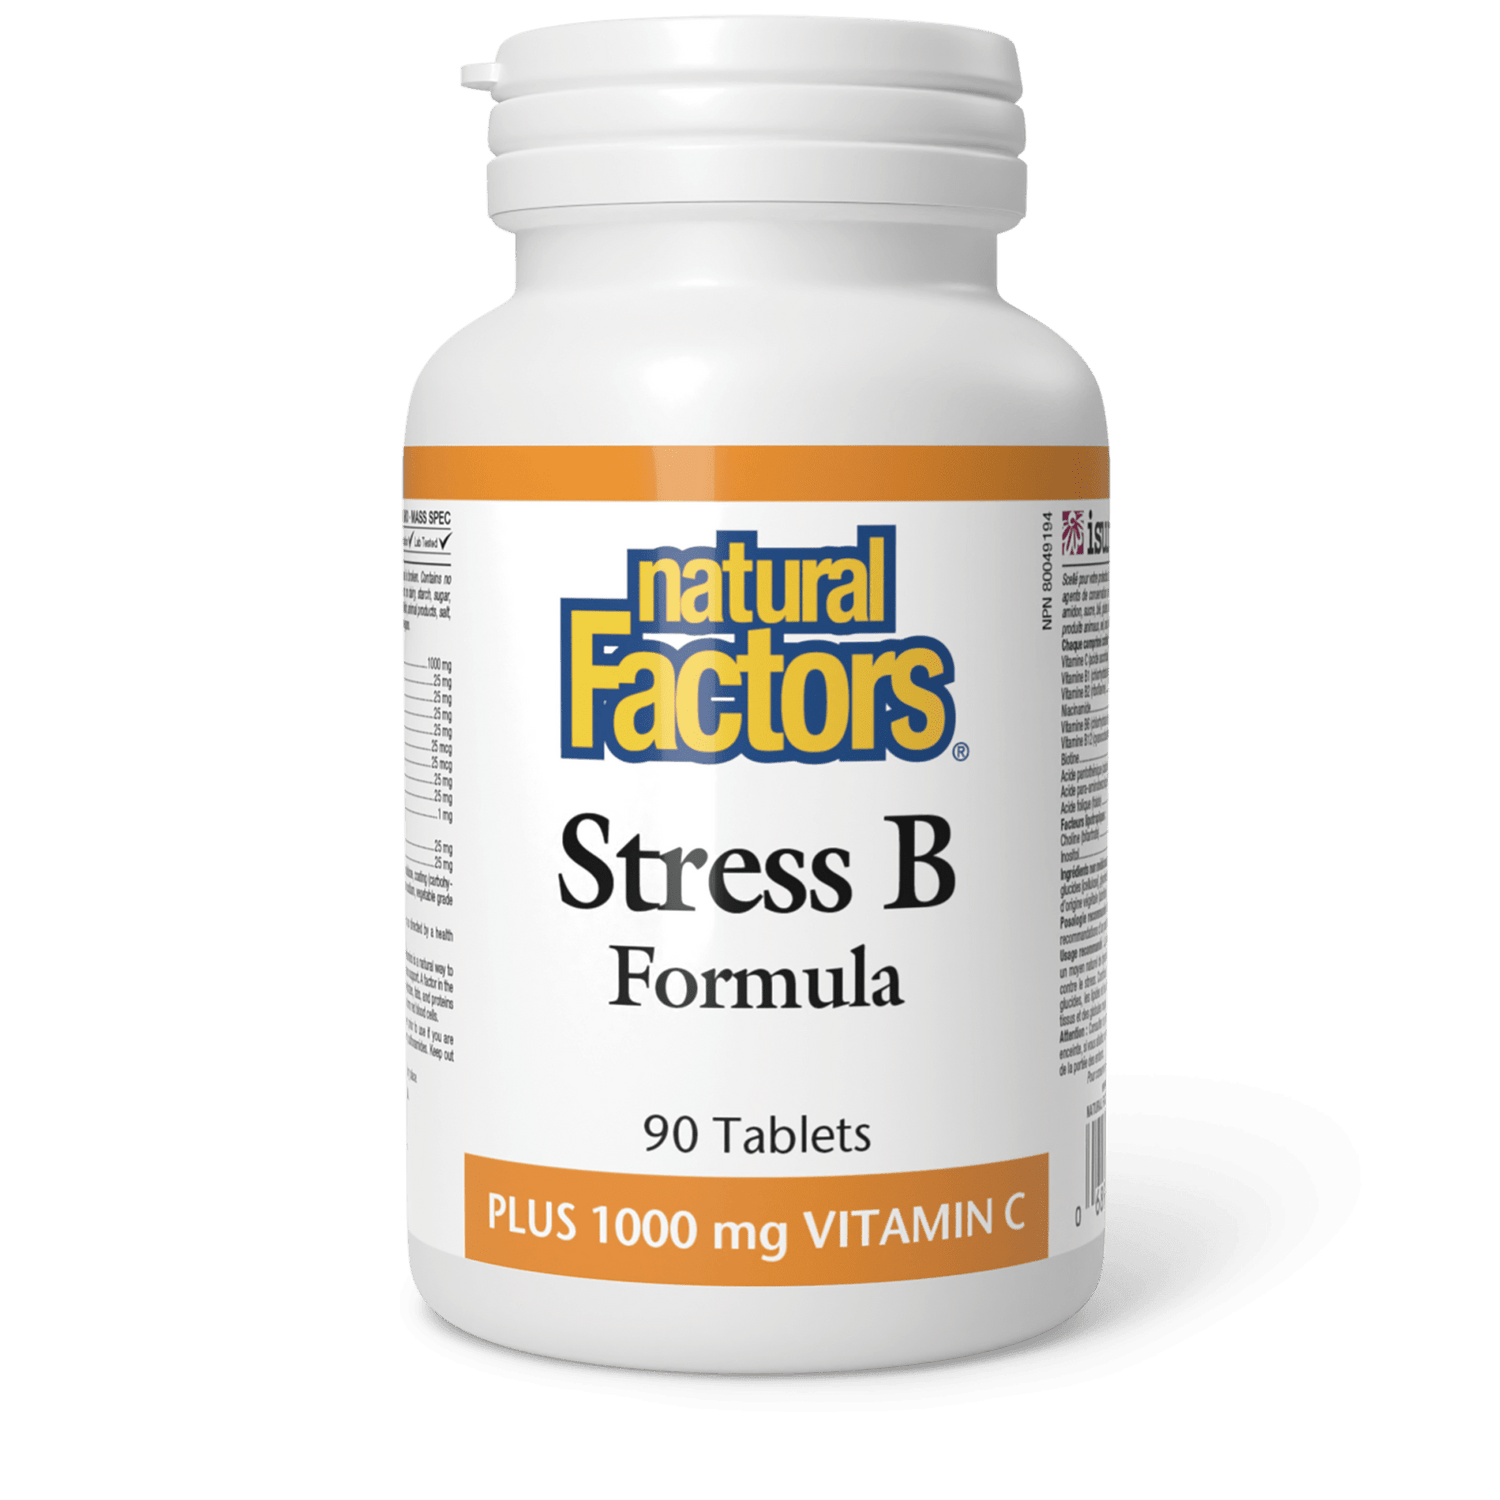 Stress B Formula Plus 1000 mg Vitamin C, Natural Factors|v|image|1131